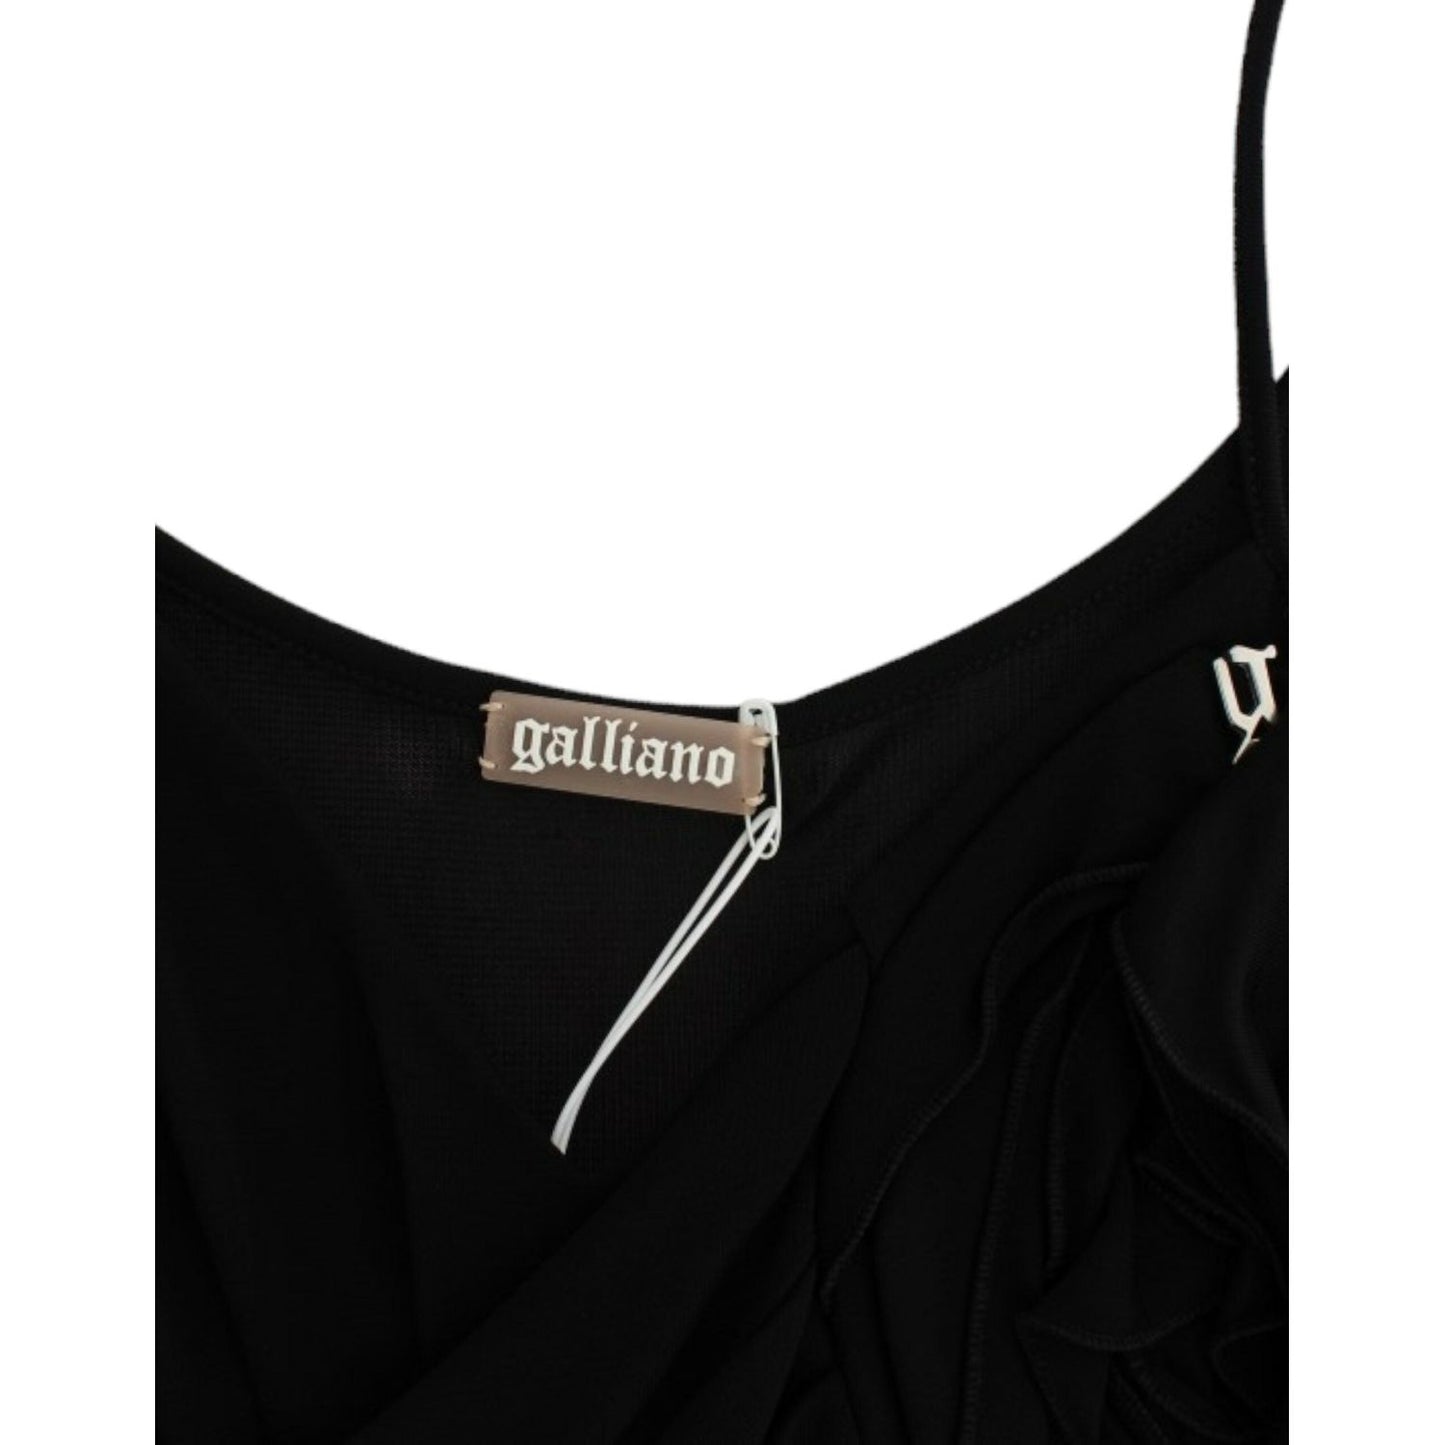 John Galliano Elegant Black Jersey Knee-Length Dress Dresses black-coctail-dress 6965-black-coctail-dress-5-scaled-86bb59aa-175.jpg